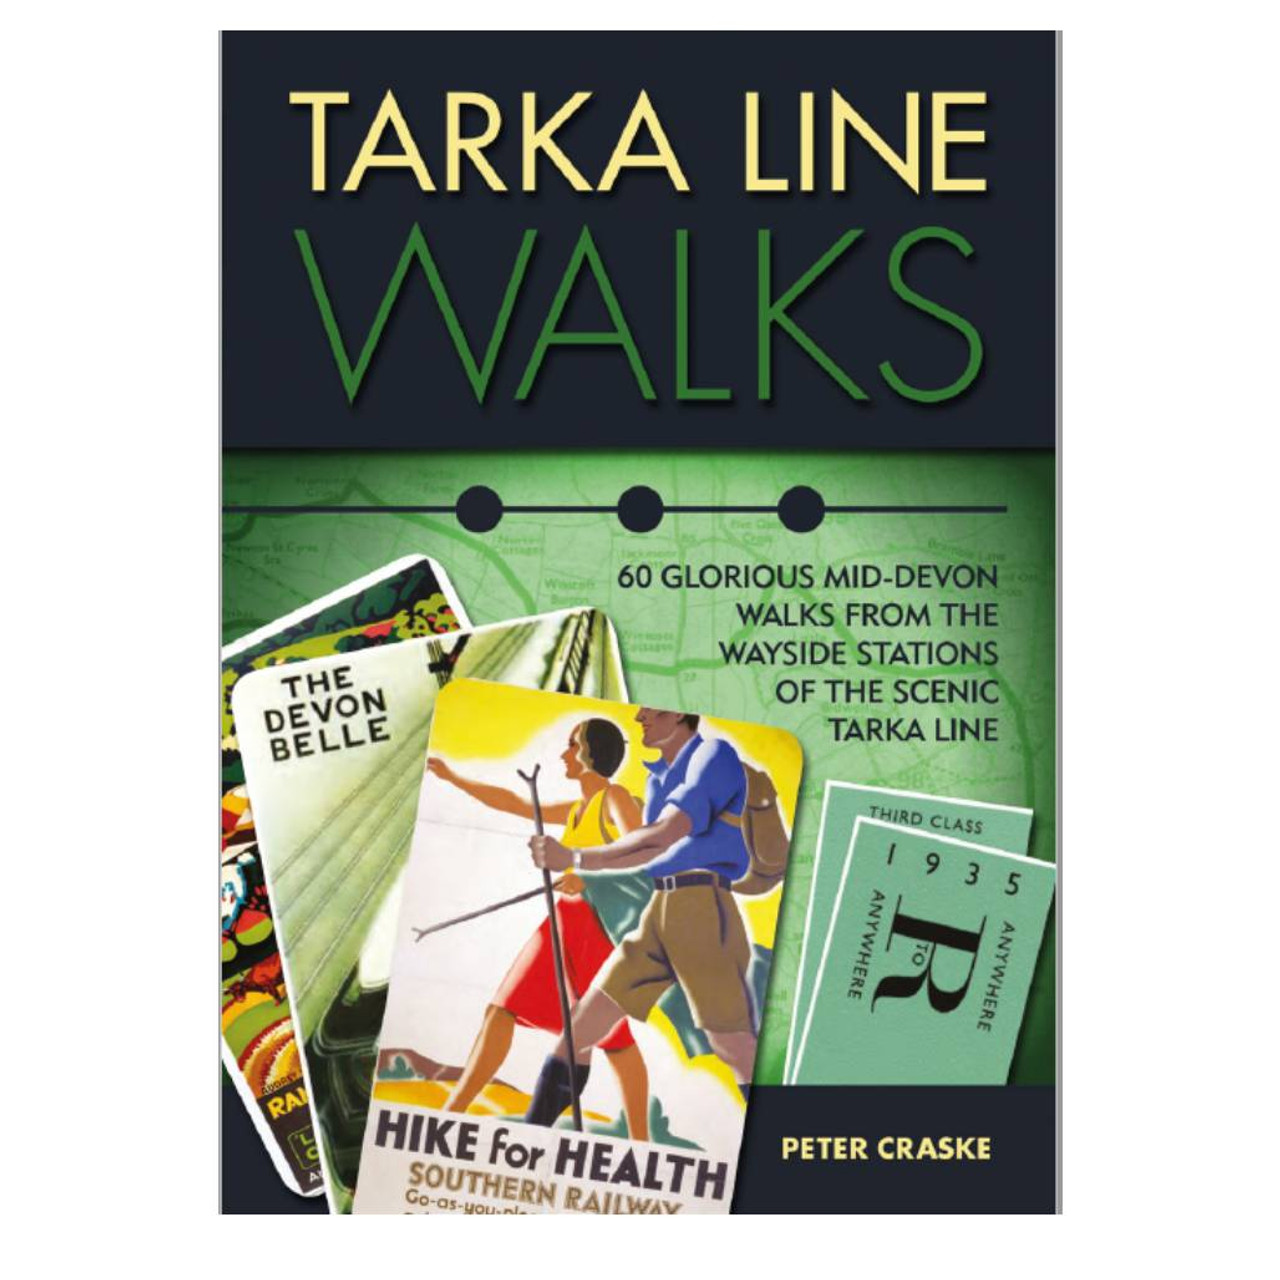 Tarka Line Walks - Pathfinder Guidebook